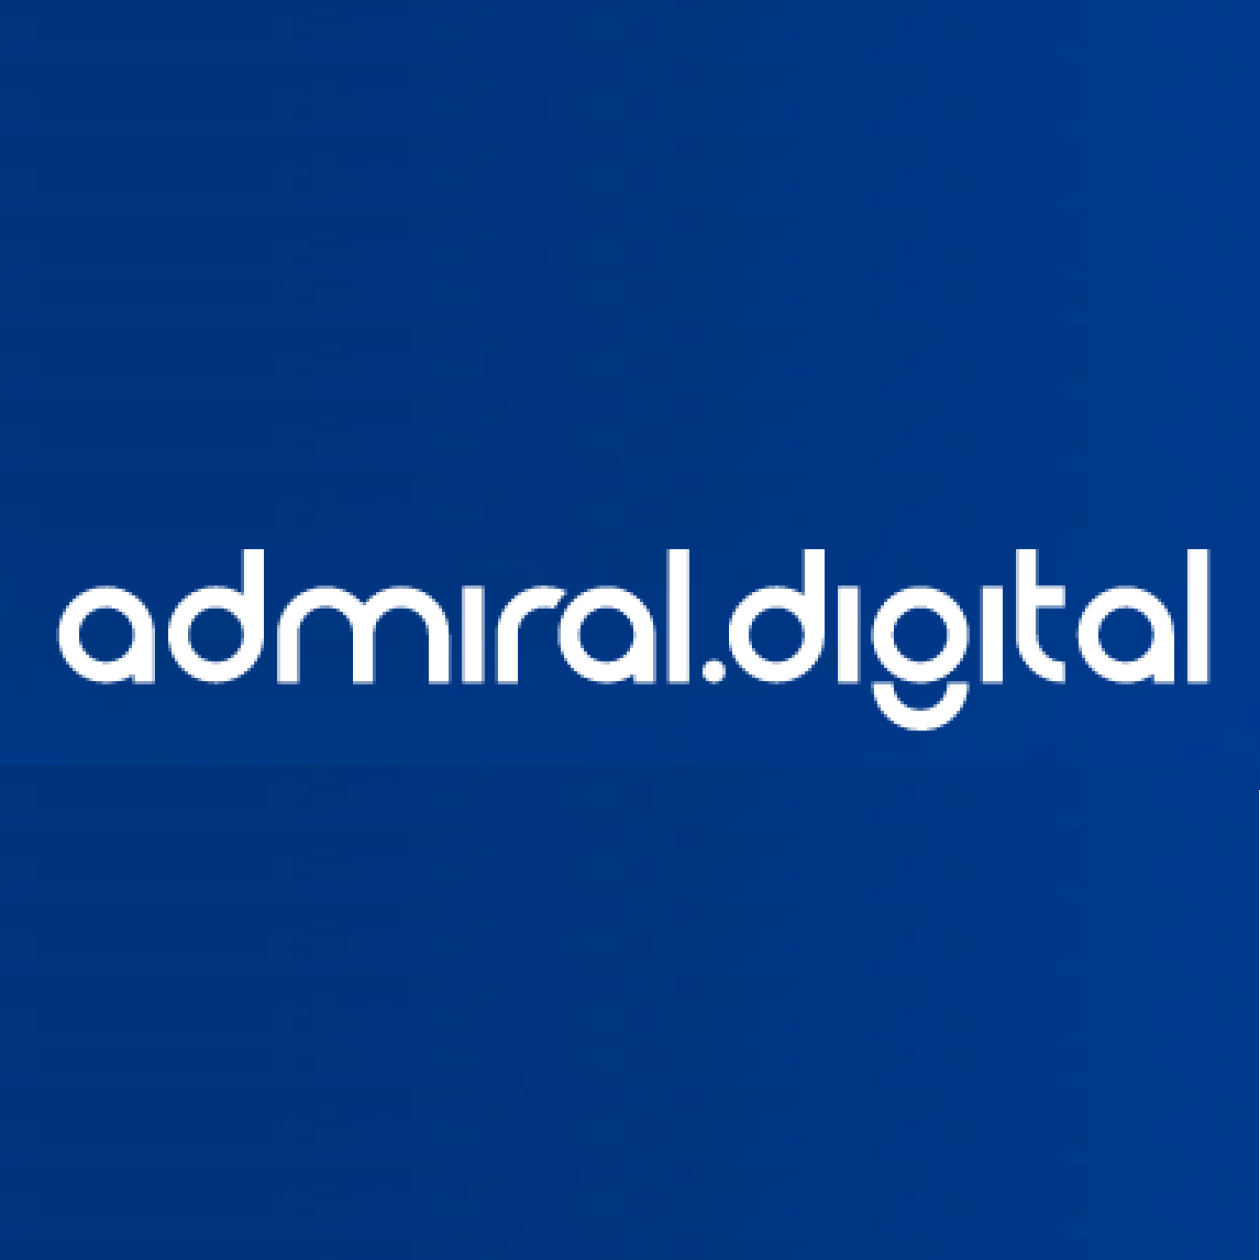 Admiral Digital